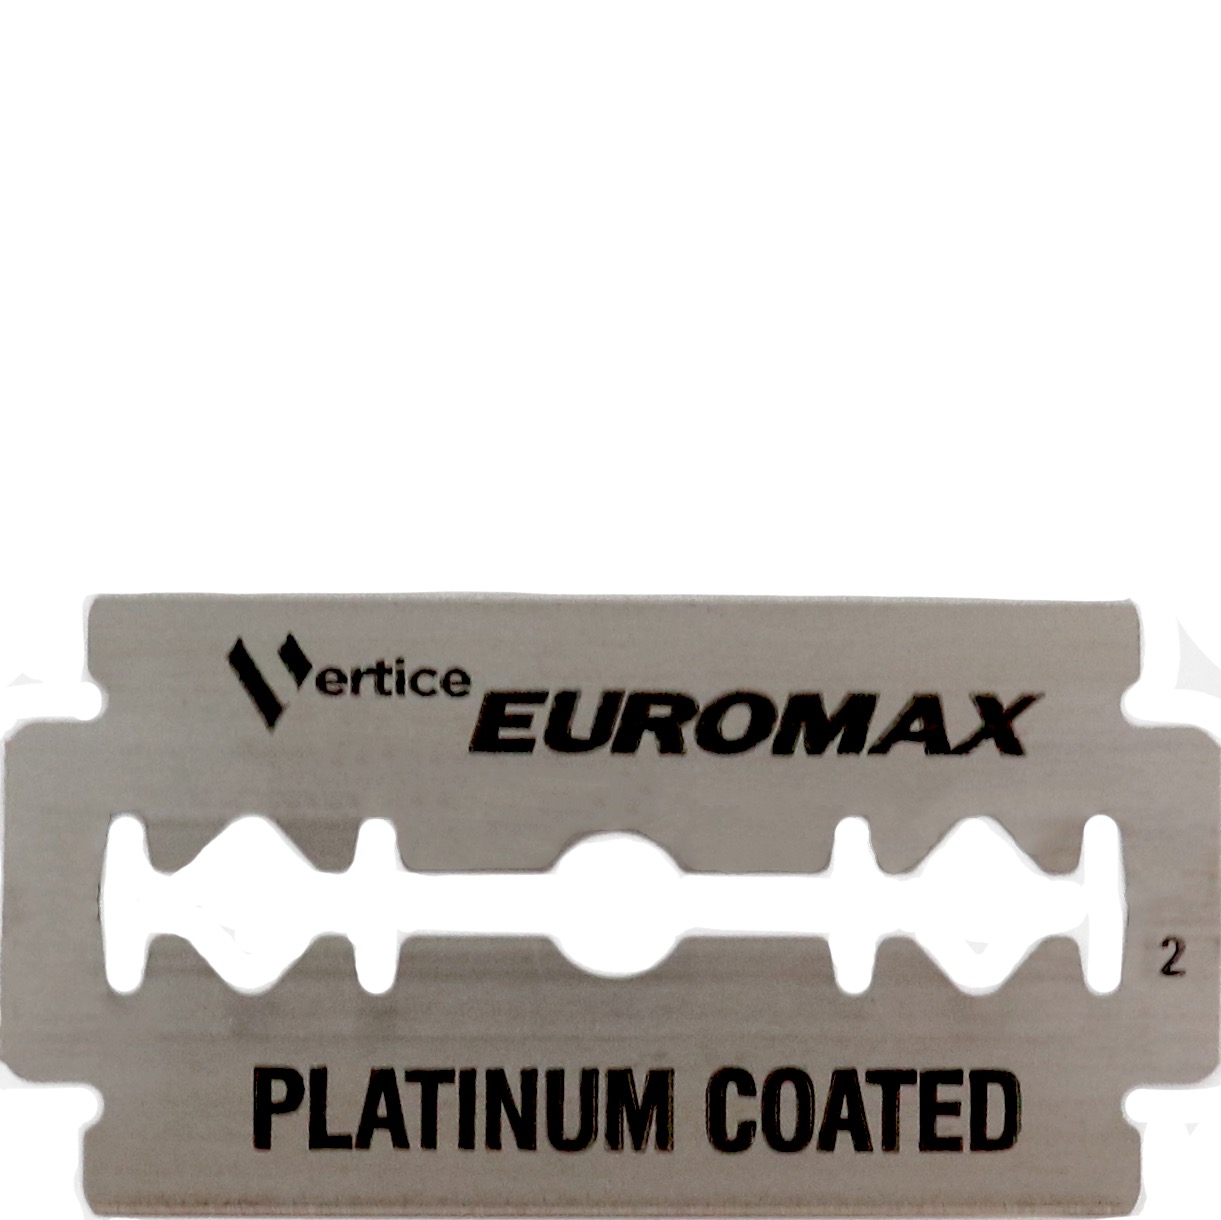 Euromax Cryo Sputtered Platinum Double edge blades - 1.2 - DEB-EUROMAX-CRYO